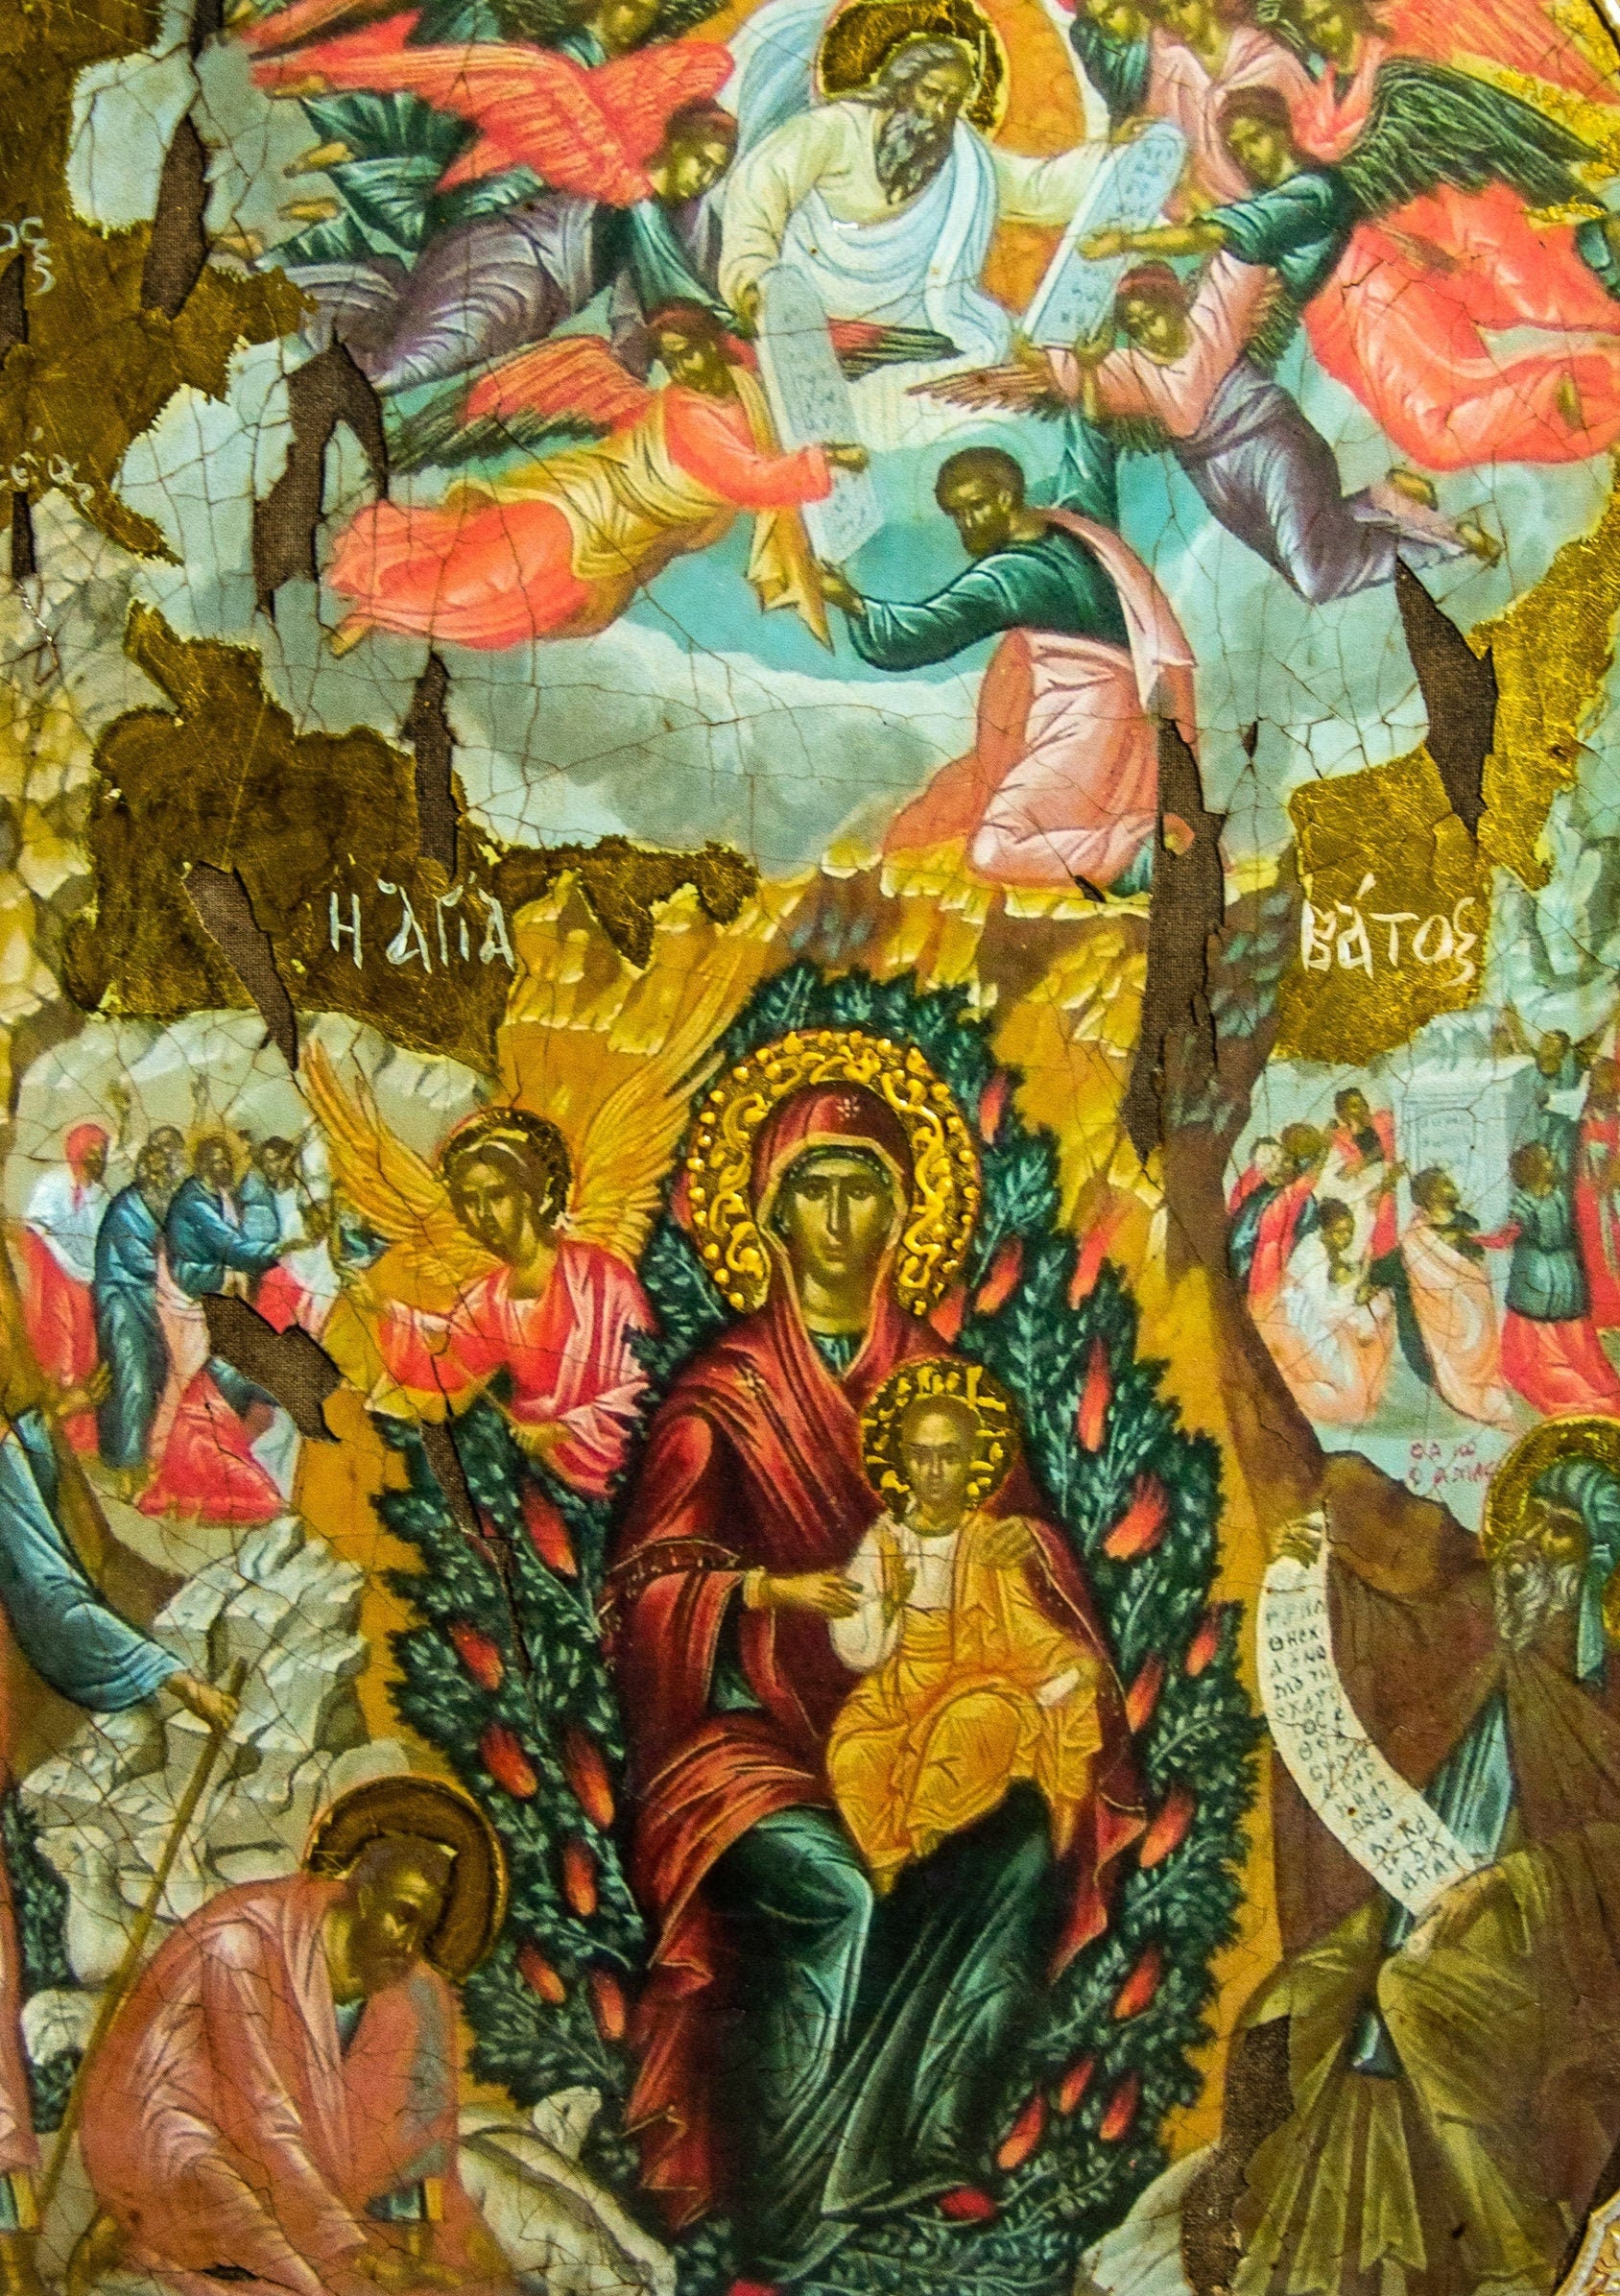 Virgin Mary icon Burning Bush Panagia, Handmade Greek Orthodox icon Theotokos, Mother of God Byzantine wall hanging canvas gold leaf 51x28cm TheHolyArt